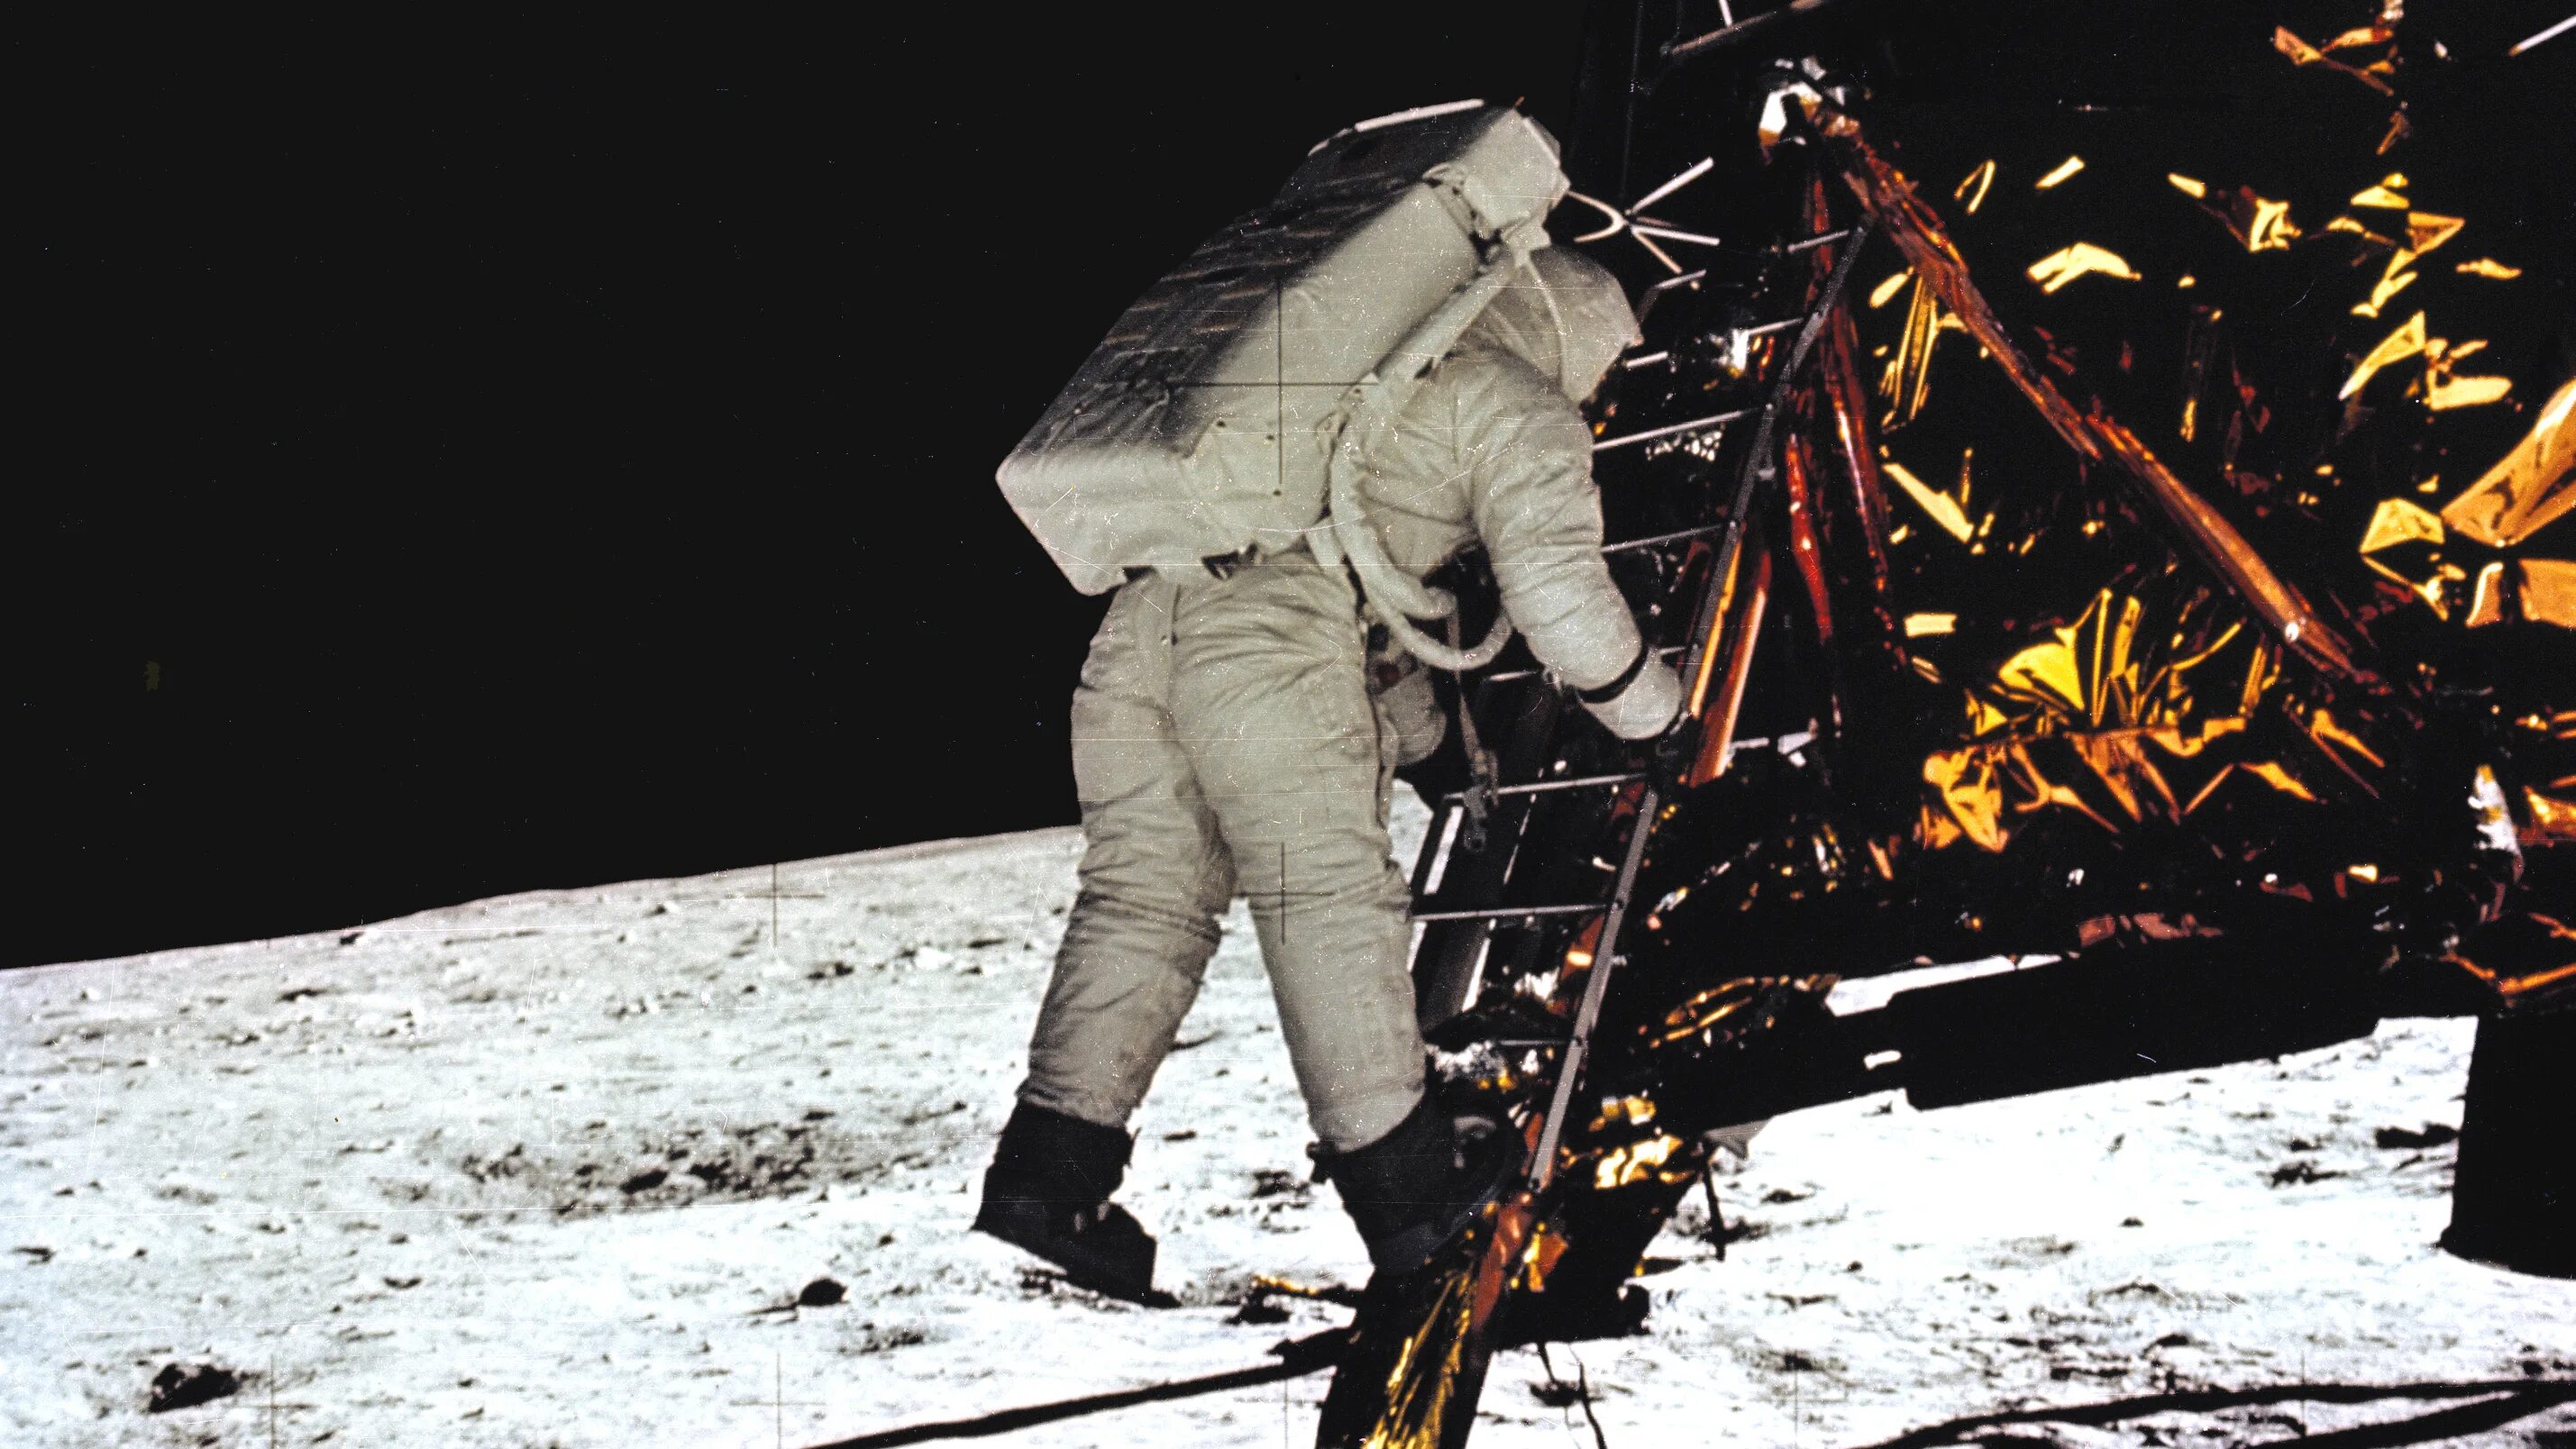 Какой аппарат совершил первую посадку на луну. Аполлон 1969. Аполлон 11 1969.